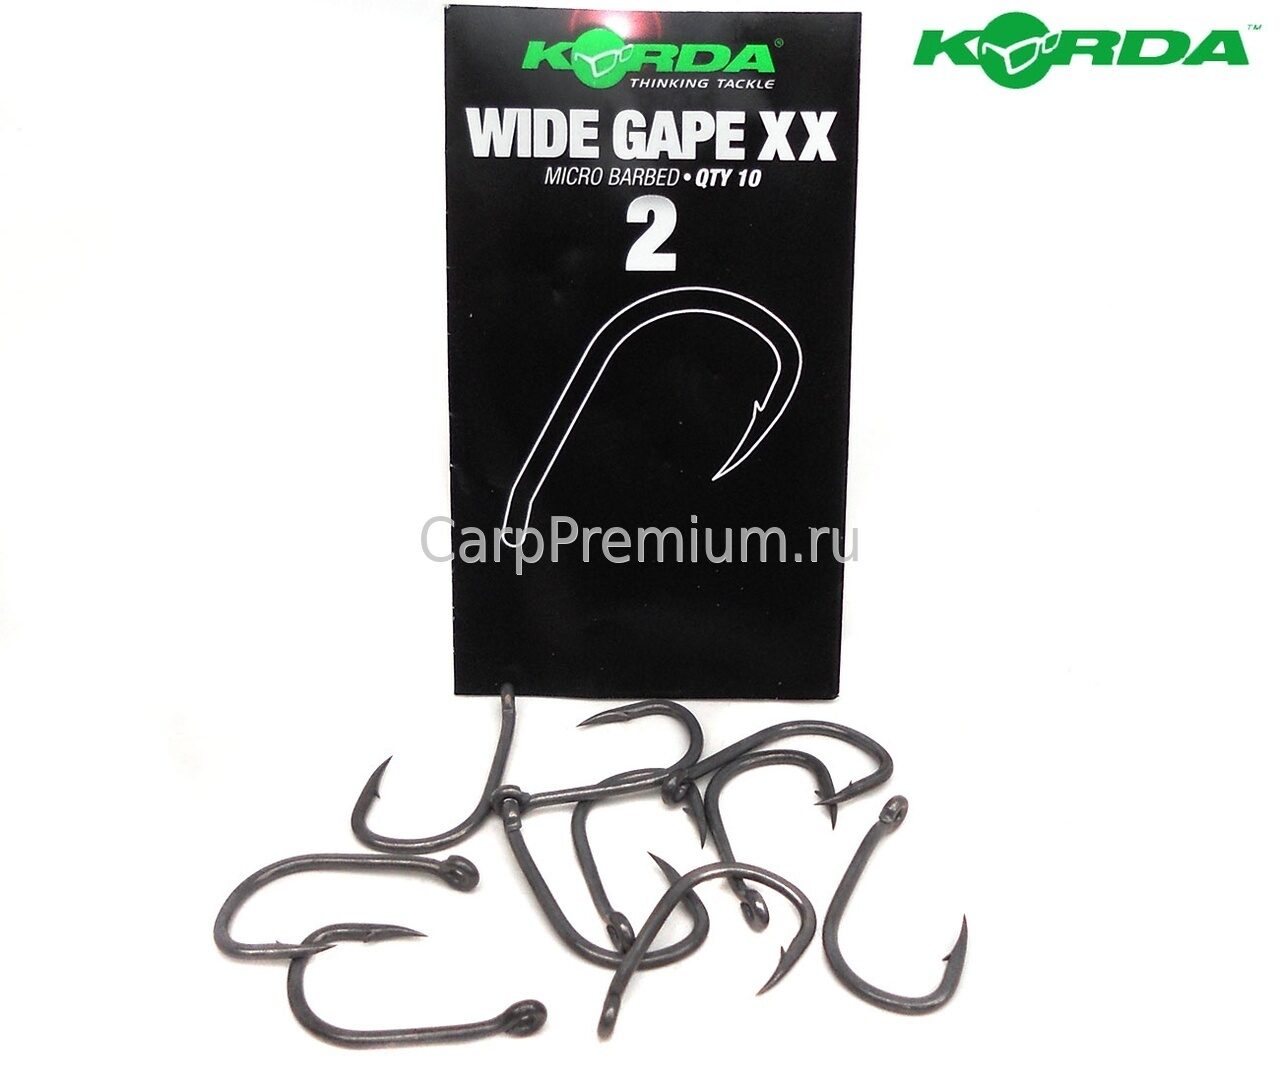 Карповые крючки Korda (Корда) - Wide Gape XX, Размер 2, 10 шт